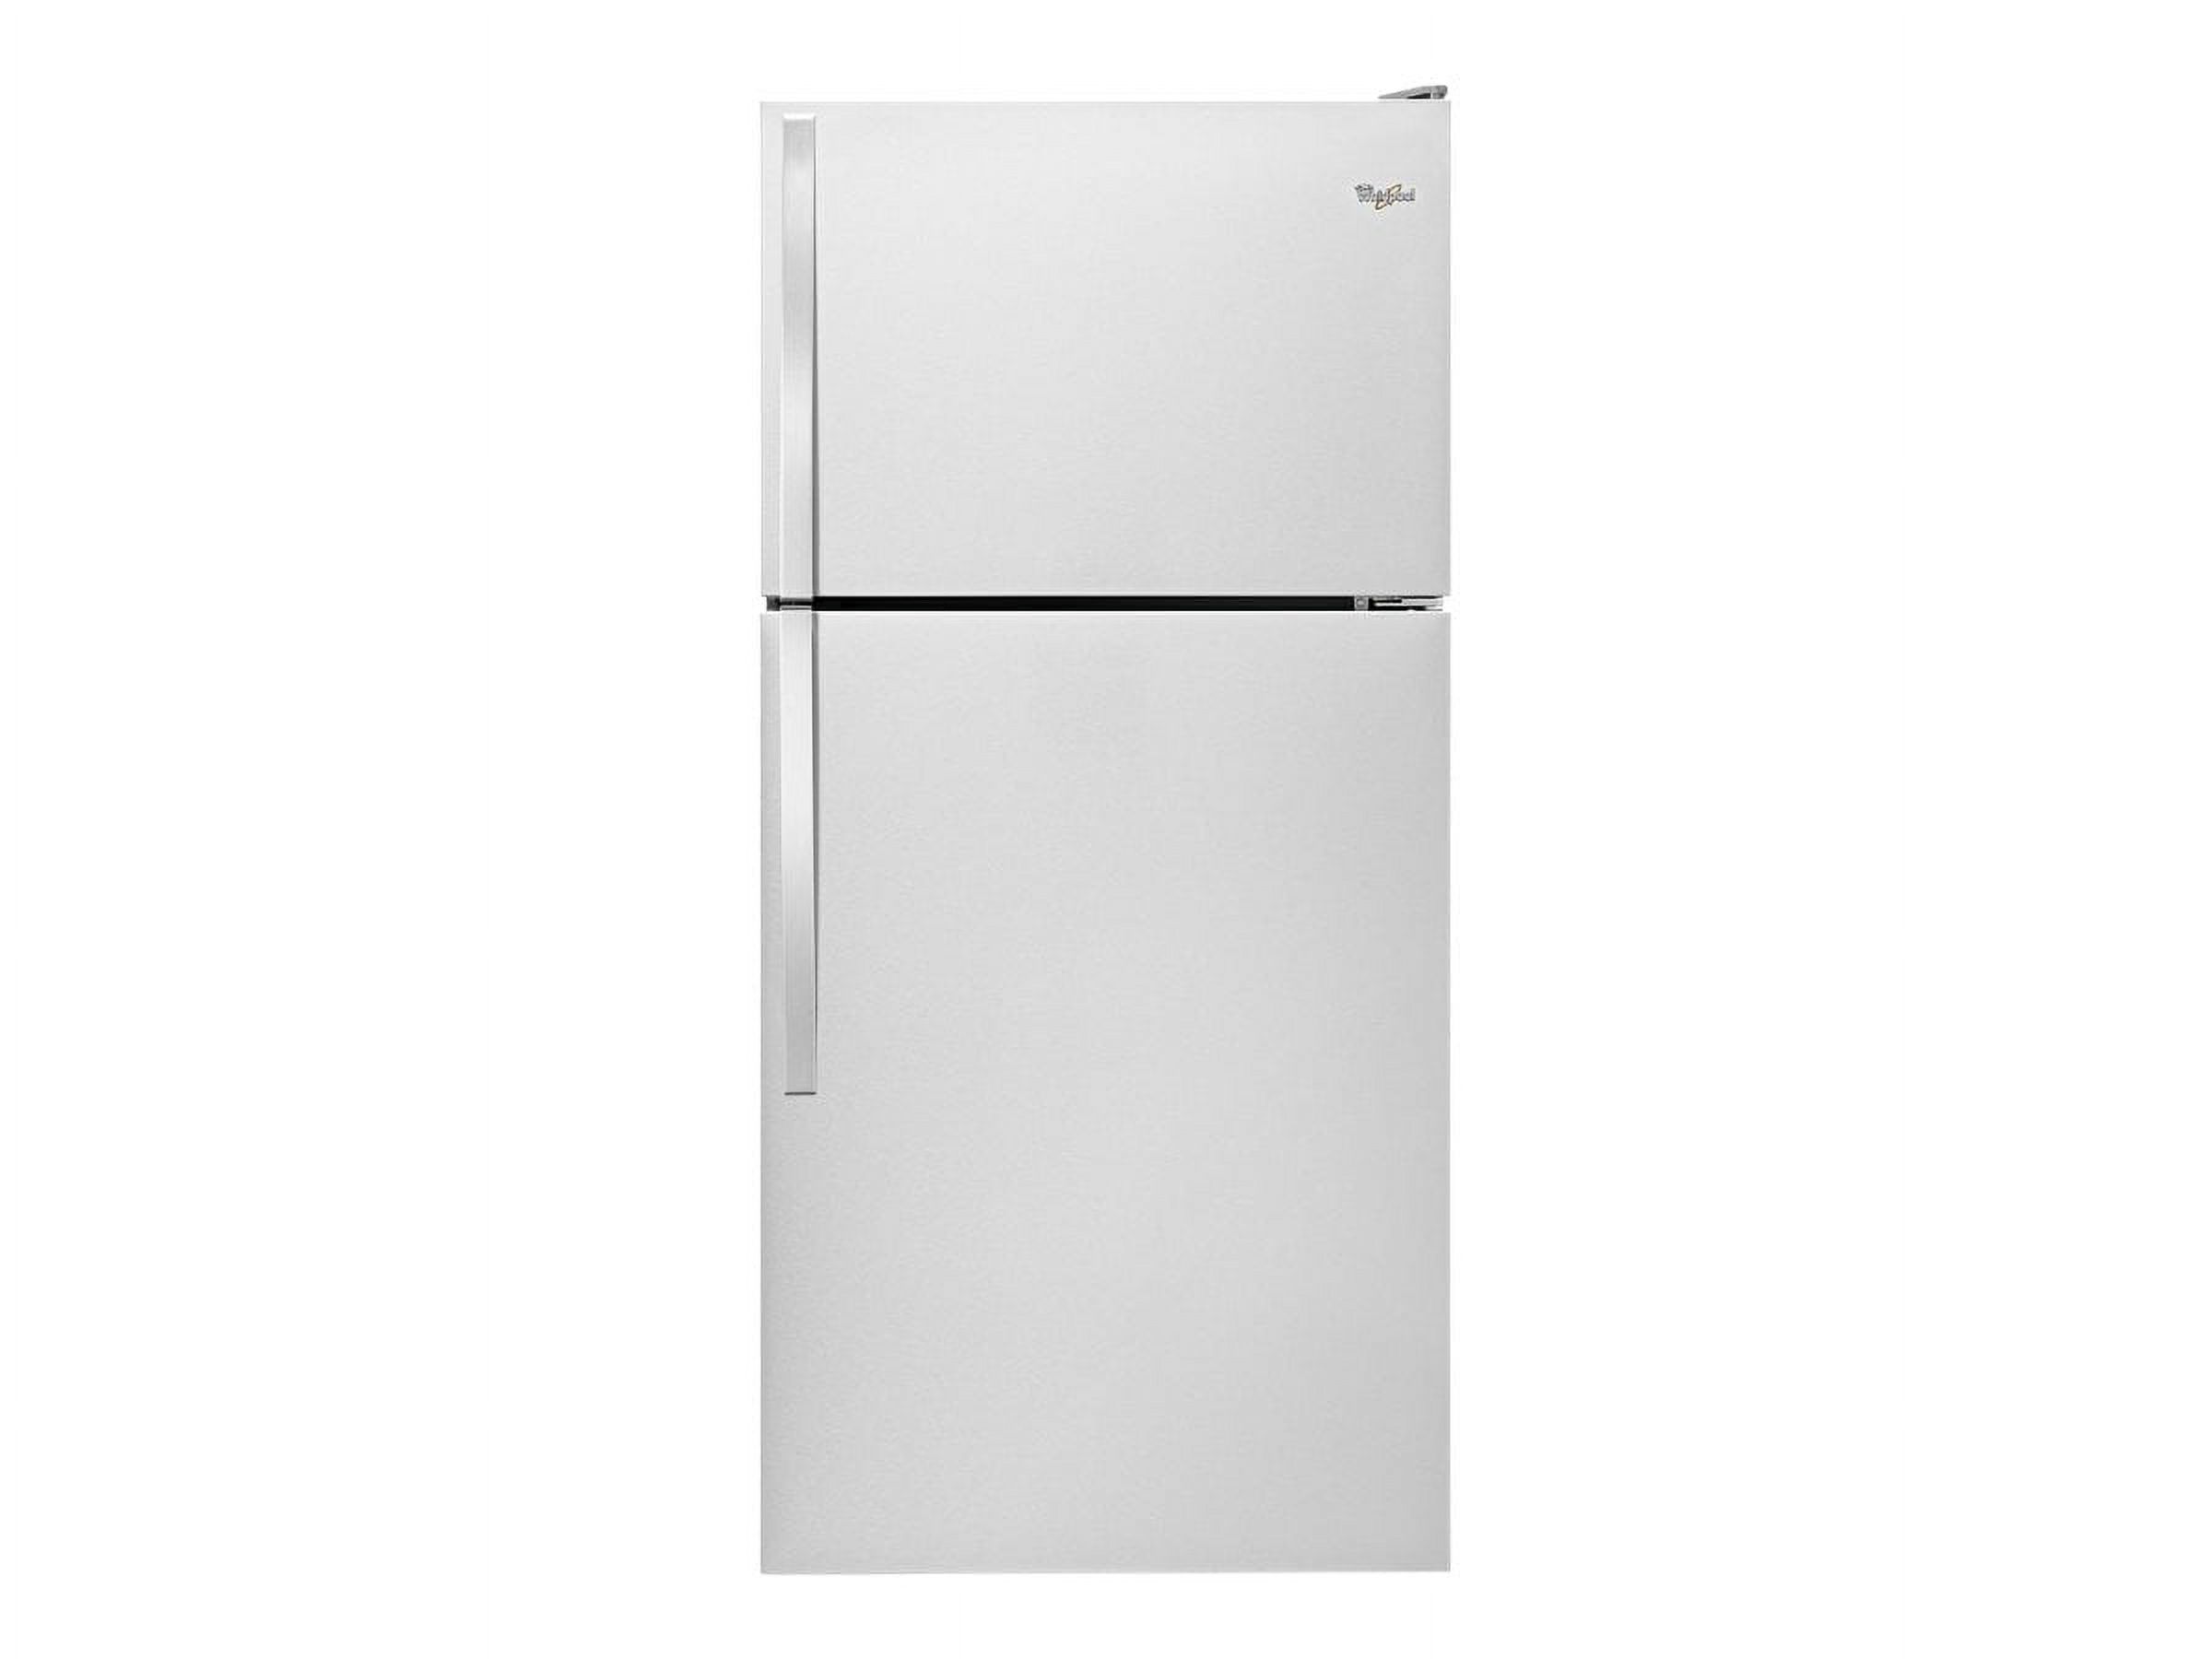 Whirlpool® WRT318FZDM: 30-inch Wide Top Freezer Refrigerator - 18 cu. ft - Stainless Steel. - image 1 of 8